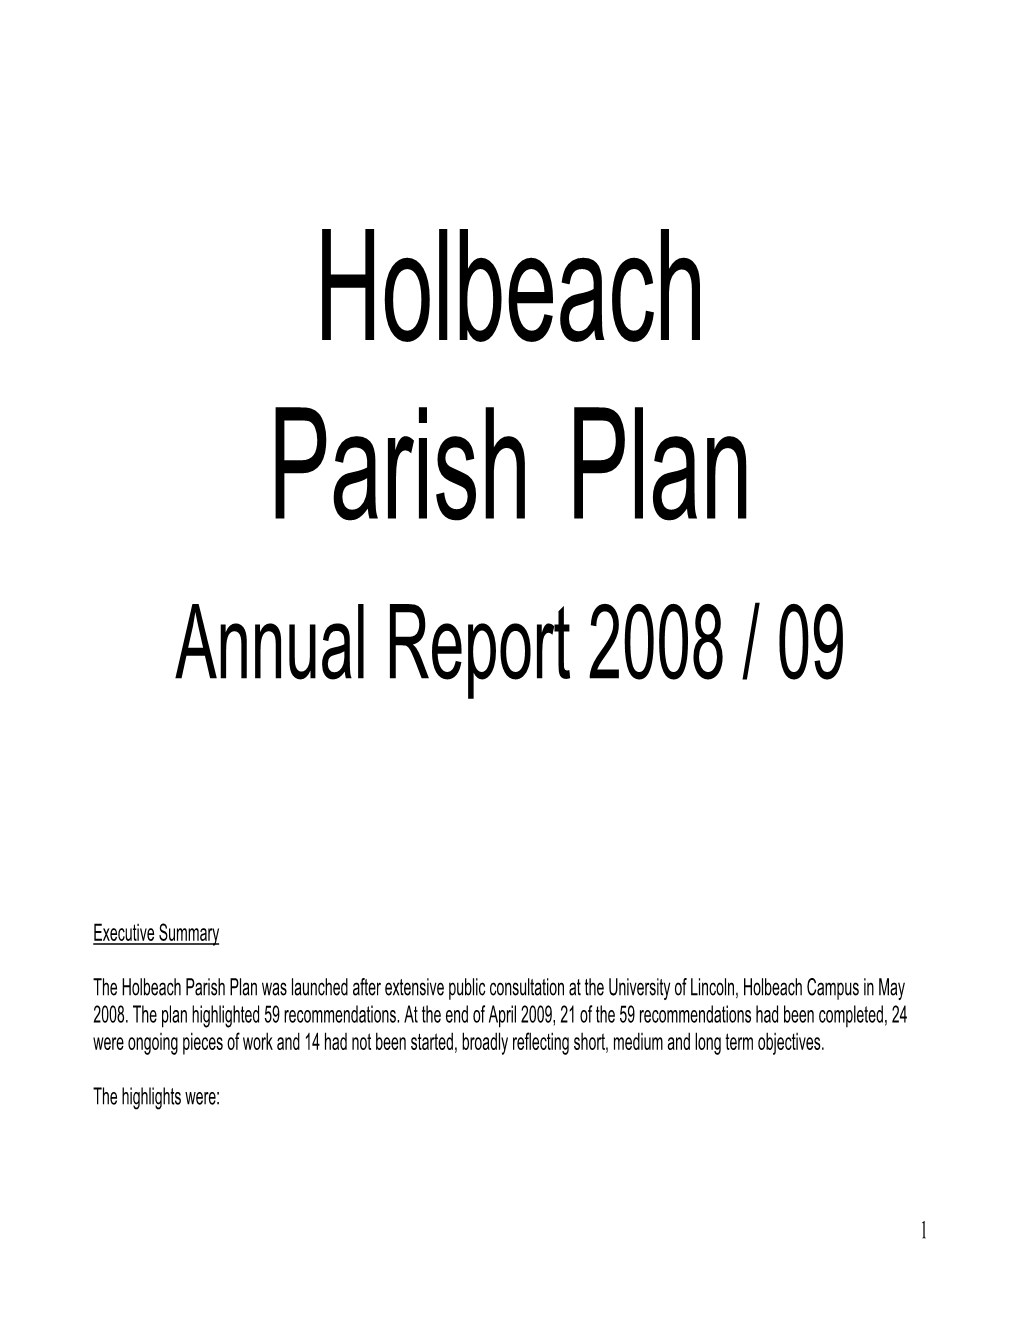 Annual Report 2008 / 09